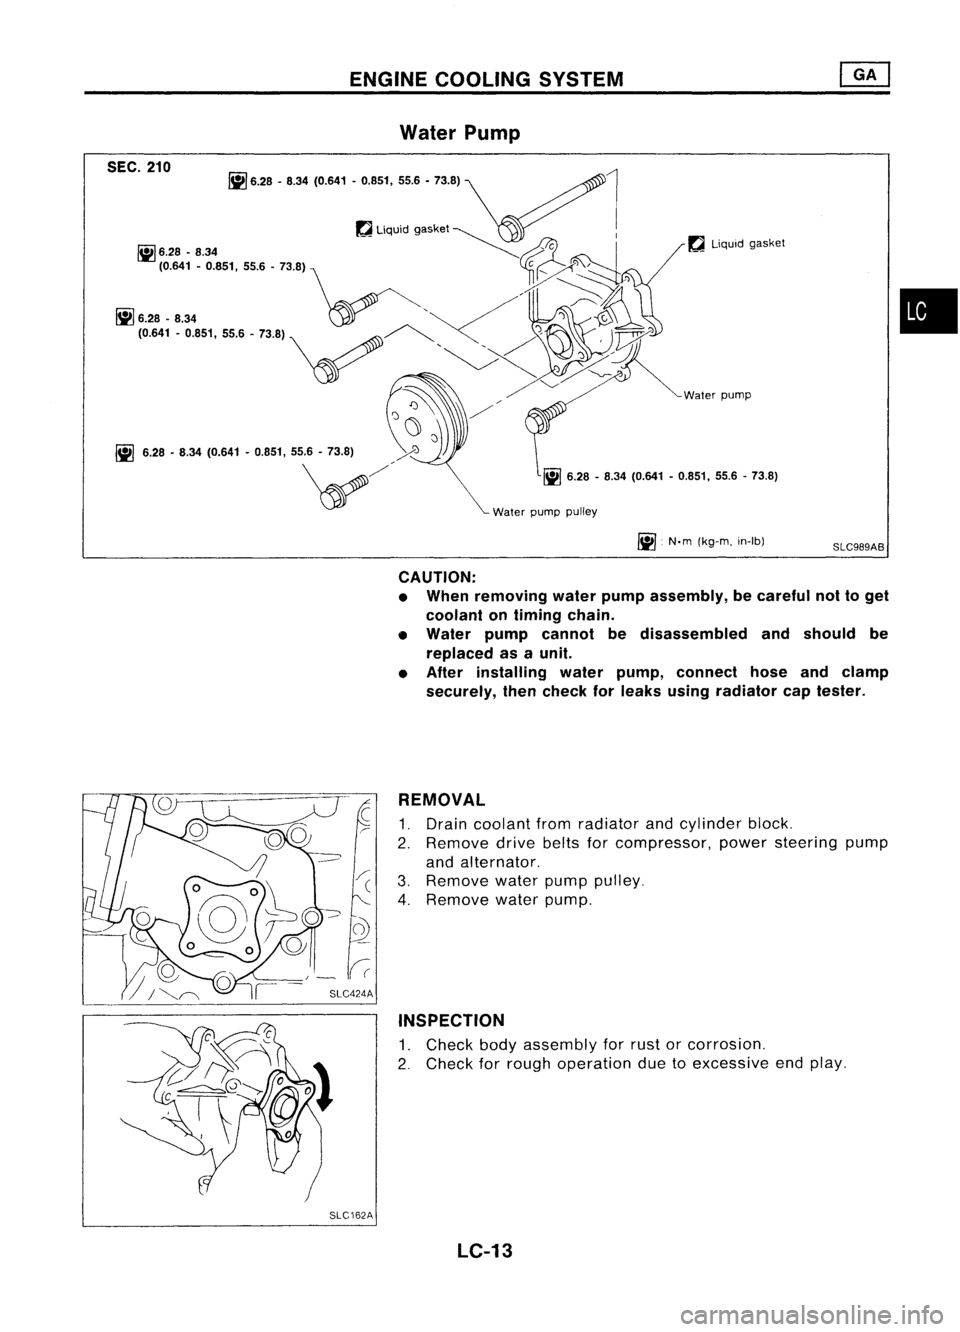 NISSAN ALMERA N15 1995  Service Manual ENGINECOOLING SYSTEM

IiJ 
6.28 -8.34 (0.641 -0.851, 55.6-73.8)

SEC.
210 Water
Pump

~ 6.28 -8.34 (0.641 -0.851, 55.6-73.8)

WaterpumppUlley 
l

~Liquid gasket
~ N.m(kg-m, in-Ib)

SLC989AB
•

CAUTI